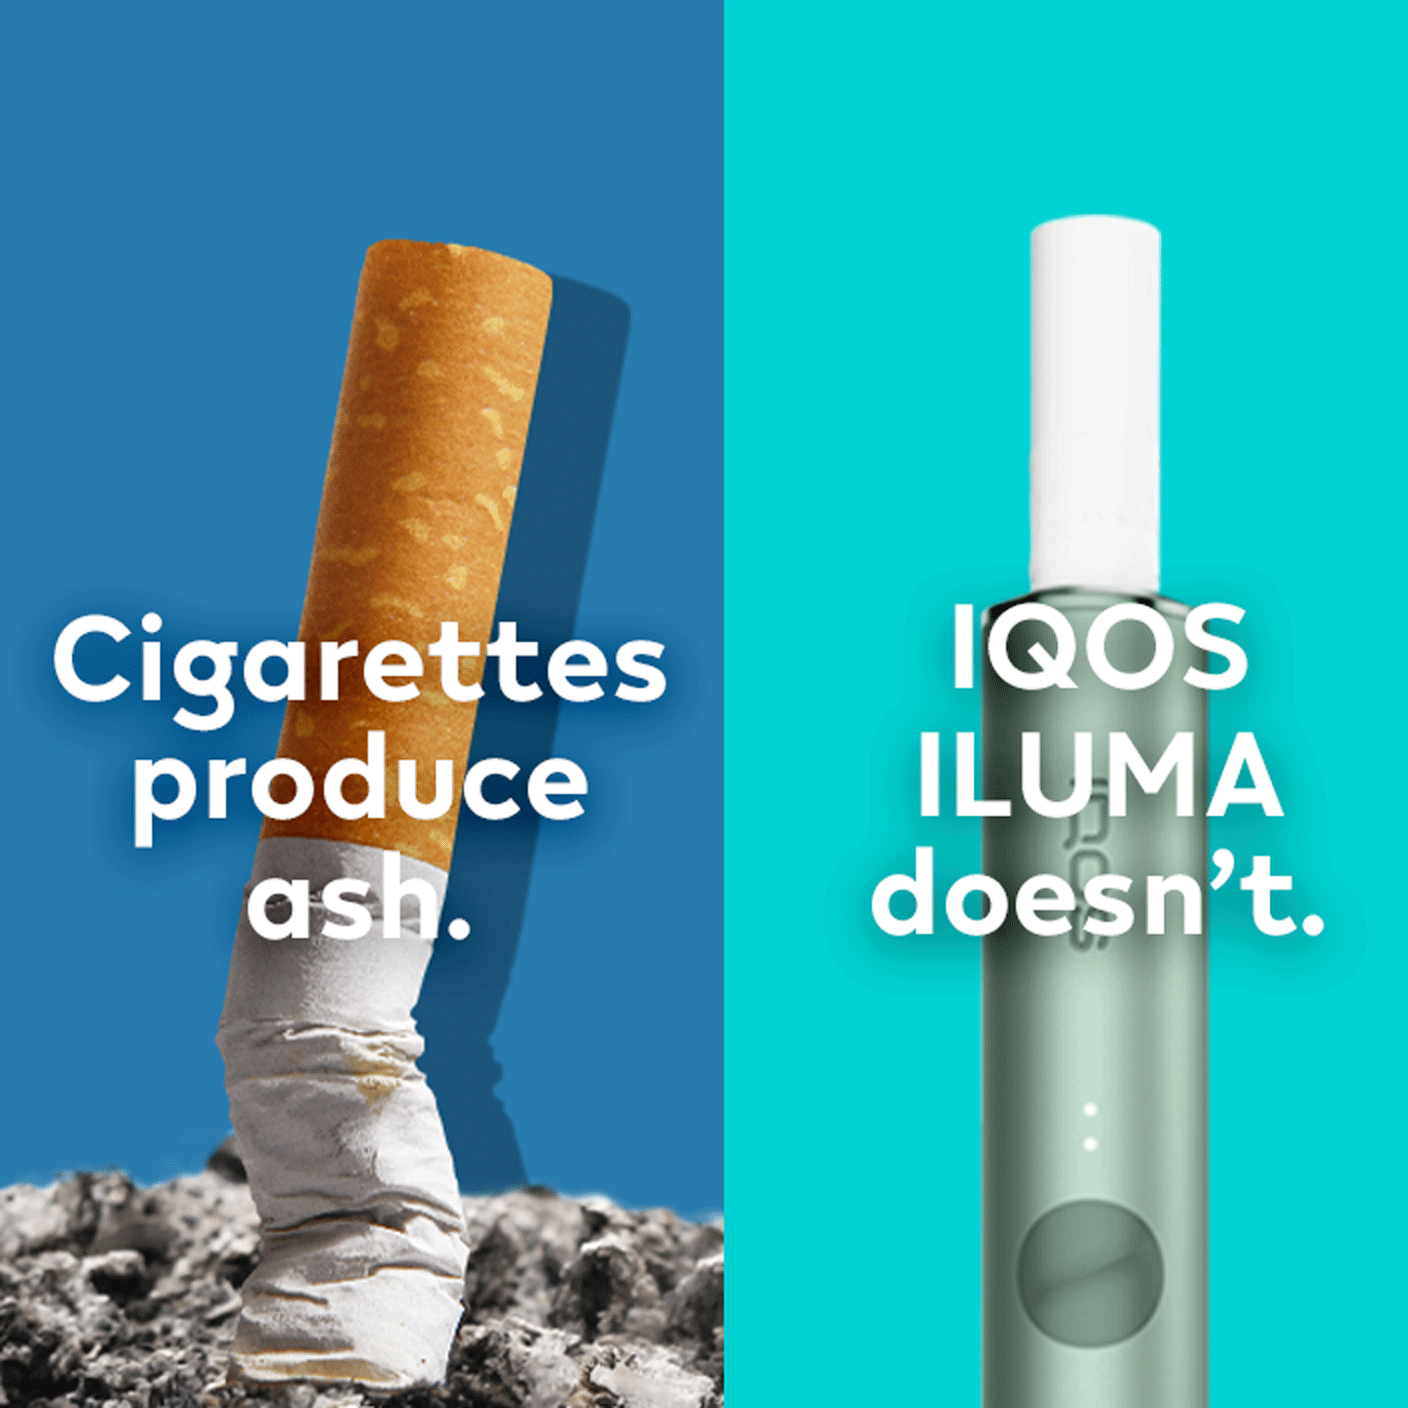 Lit cigarette compared to TEREA stick inside an IQOS ILUMA Holder.